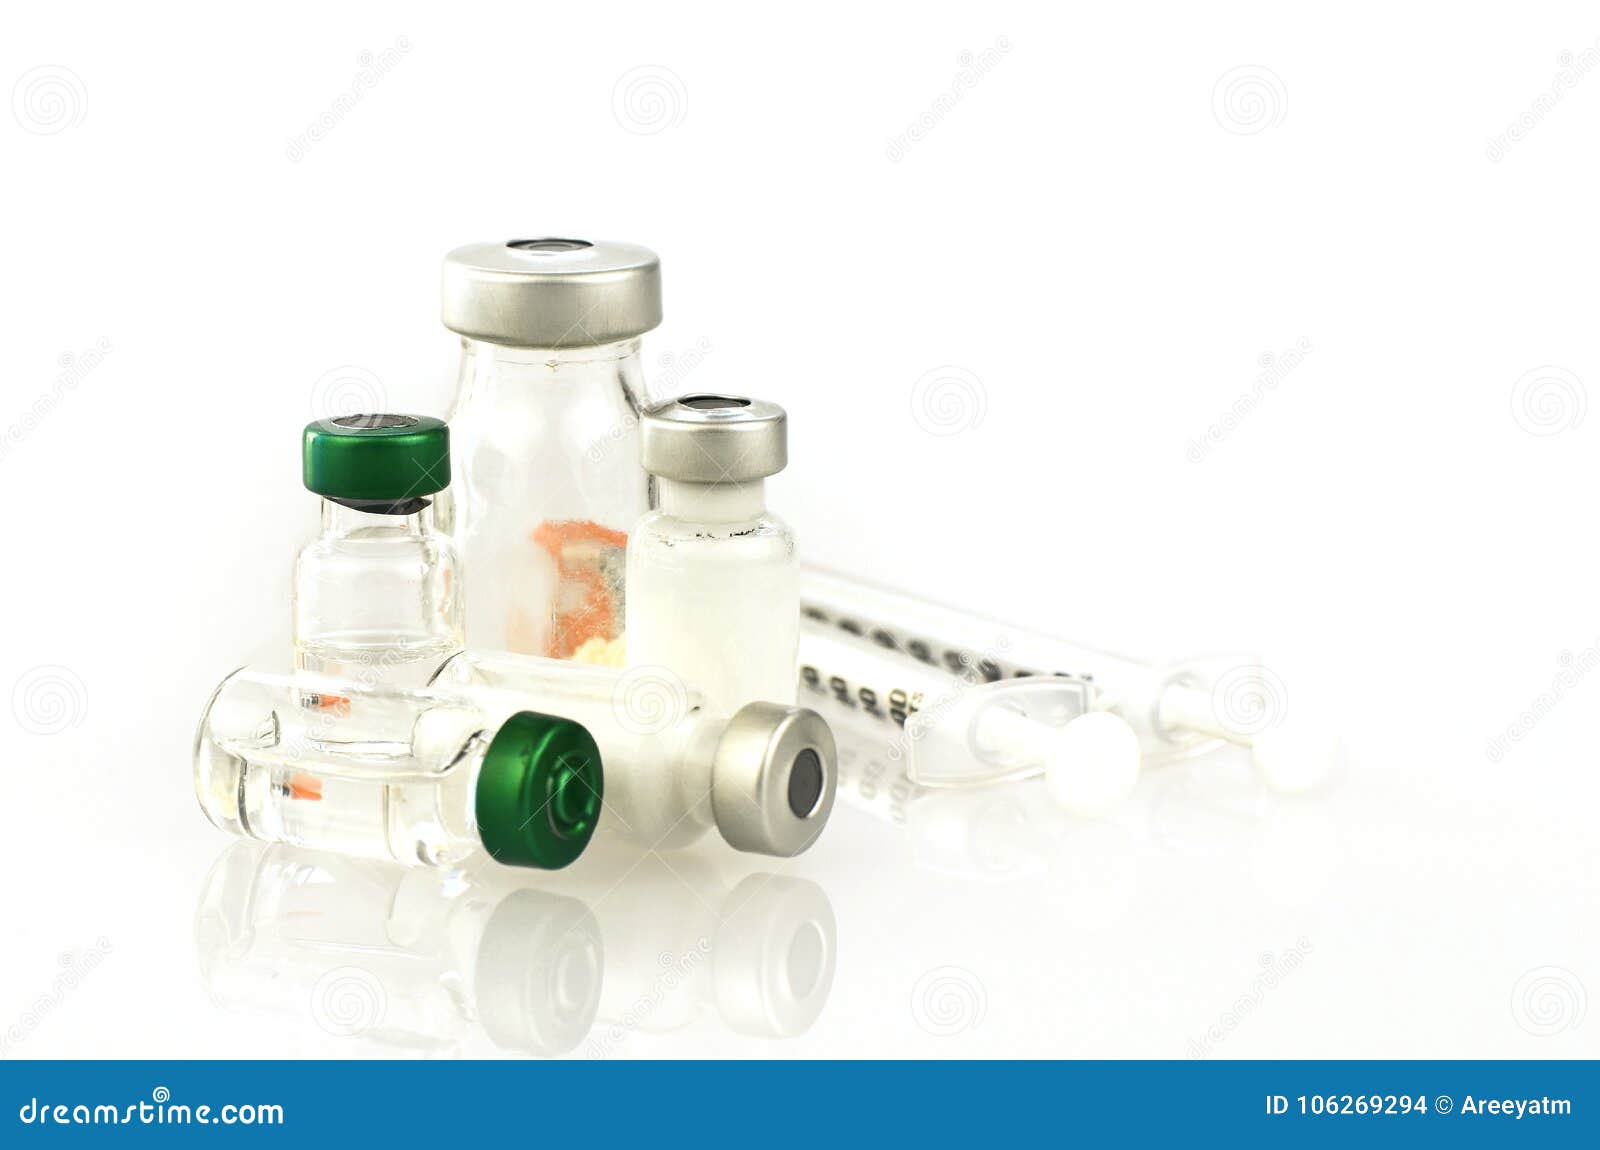 injection pharmaceutical dosage form on white background.